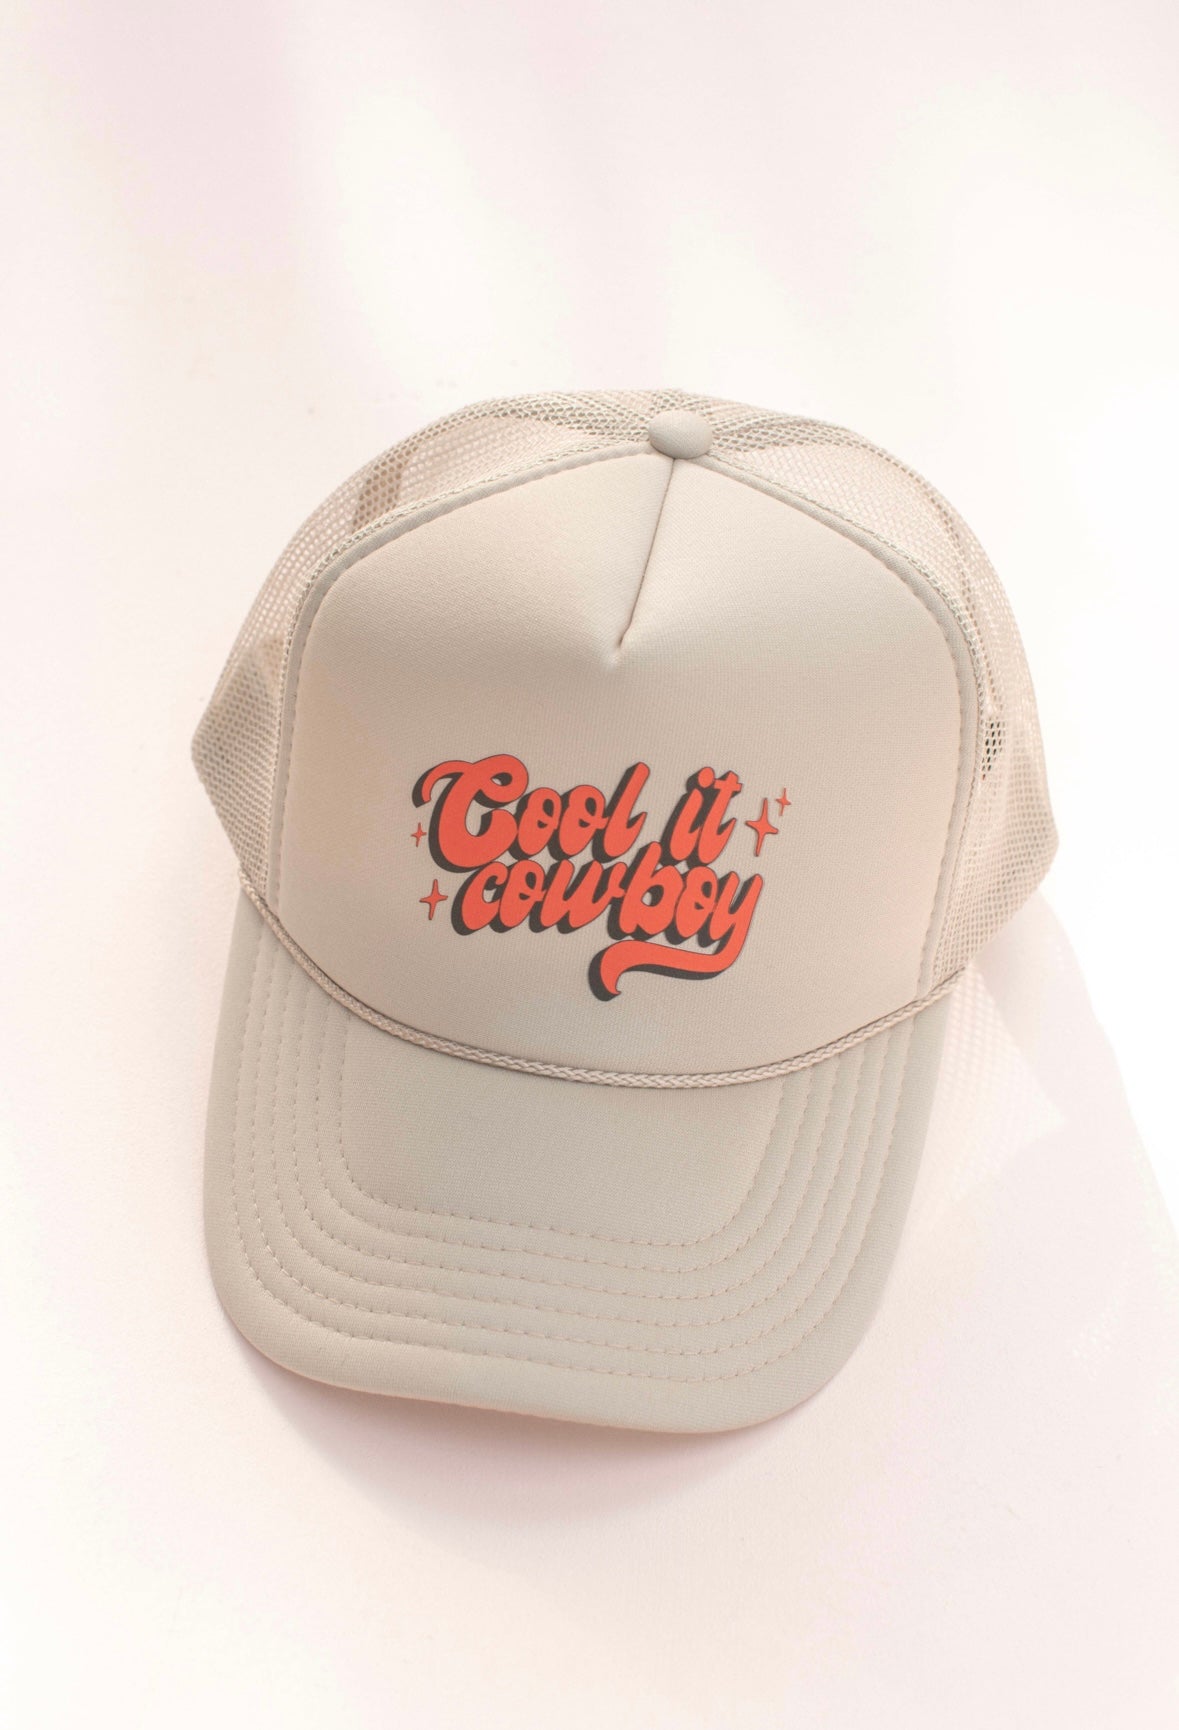 Cool it Cowboy hat